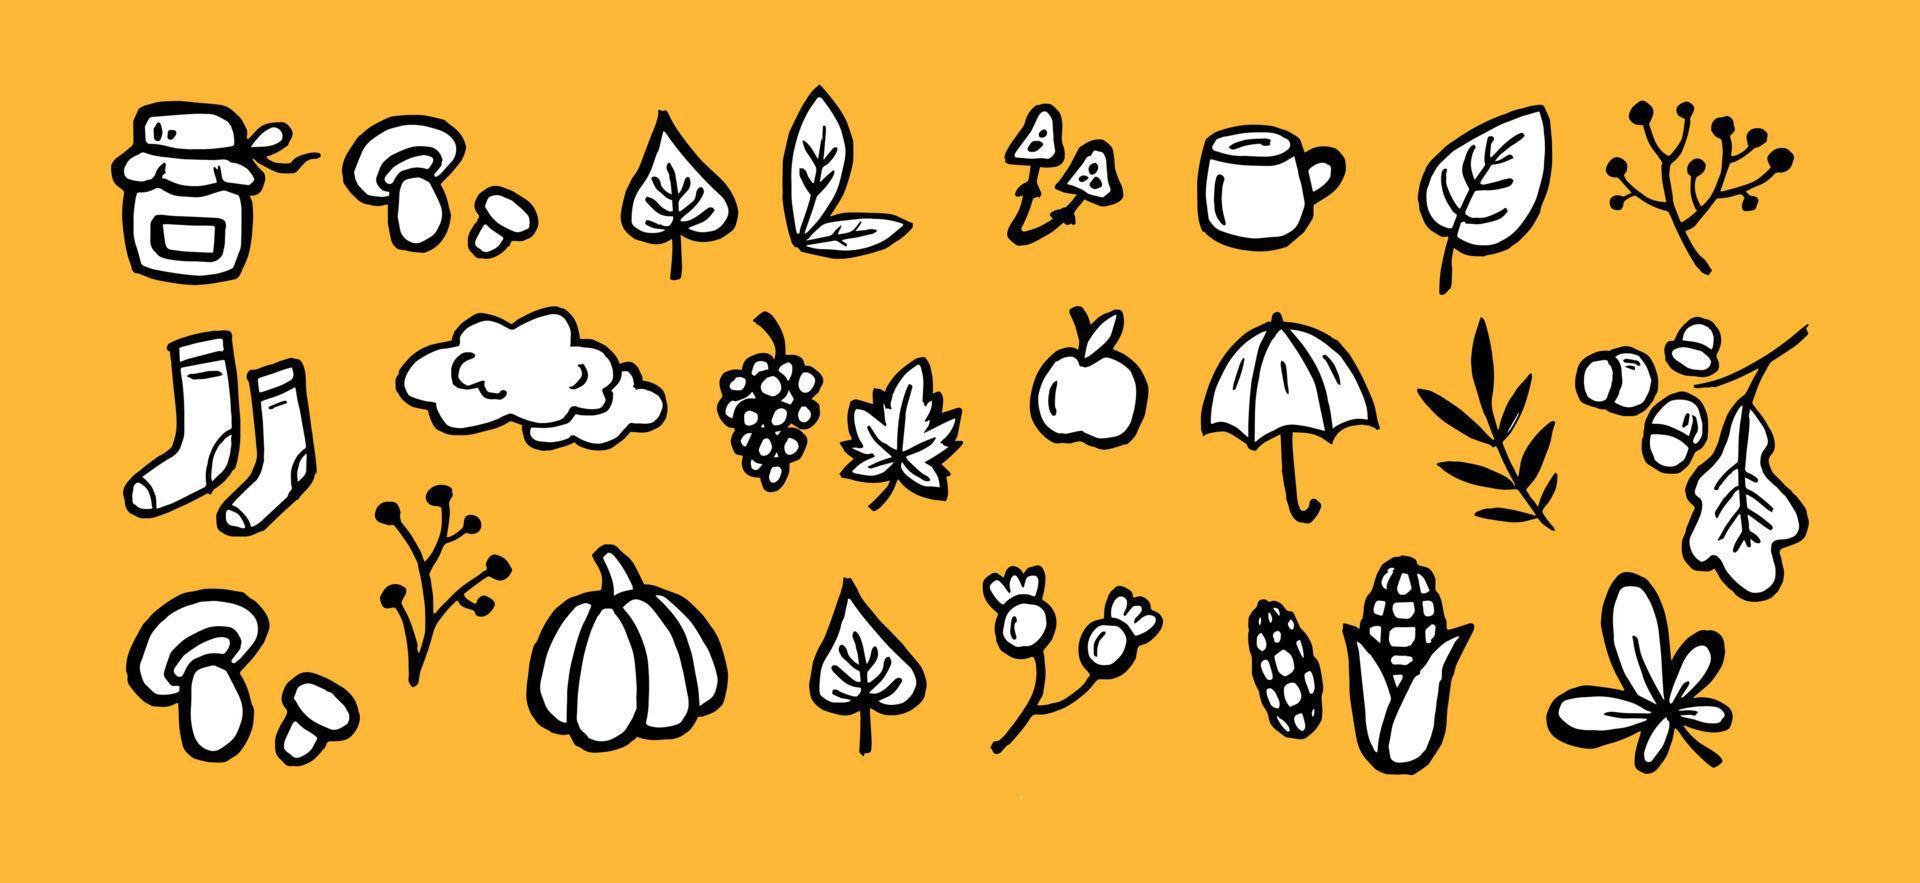 autumn set icons. autumn clip art vector black and white. sketch set - leaves, harvest, season. vegetables, plants